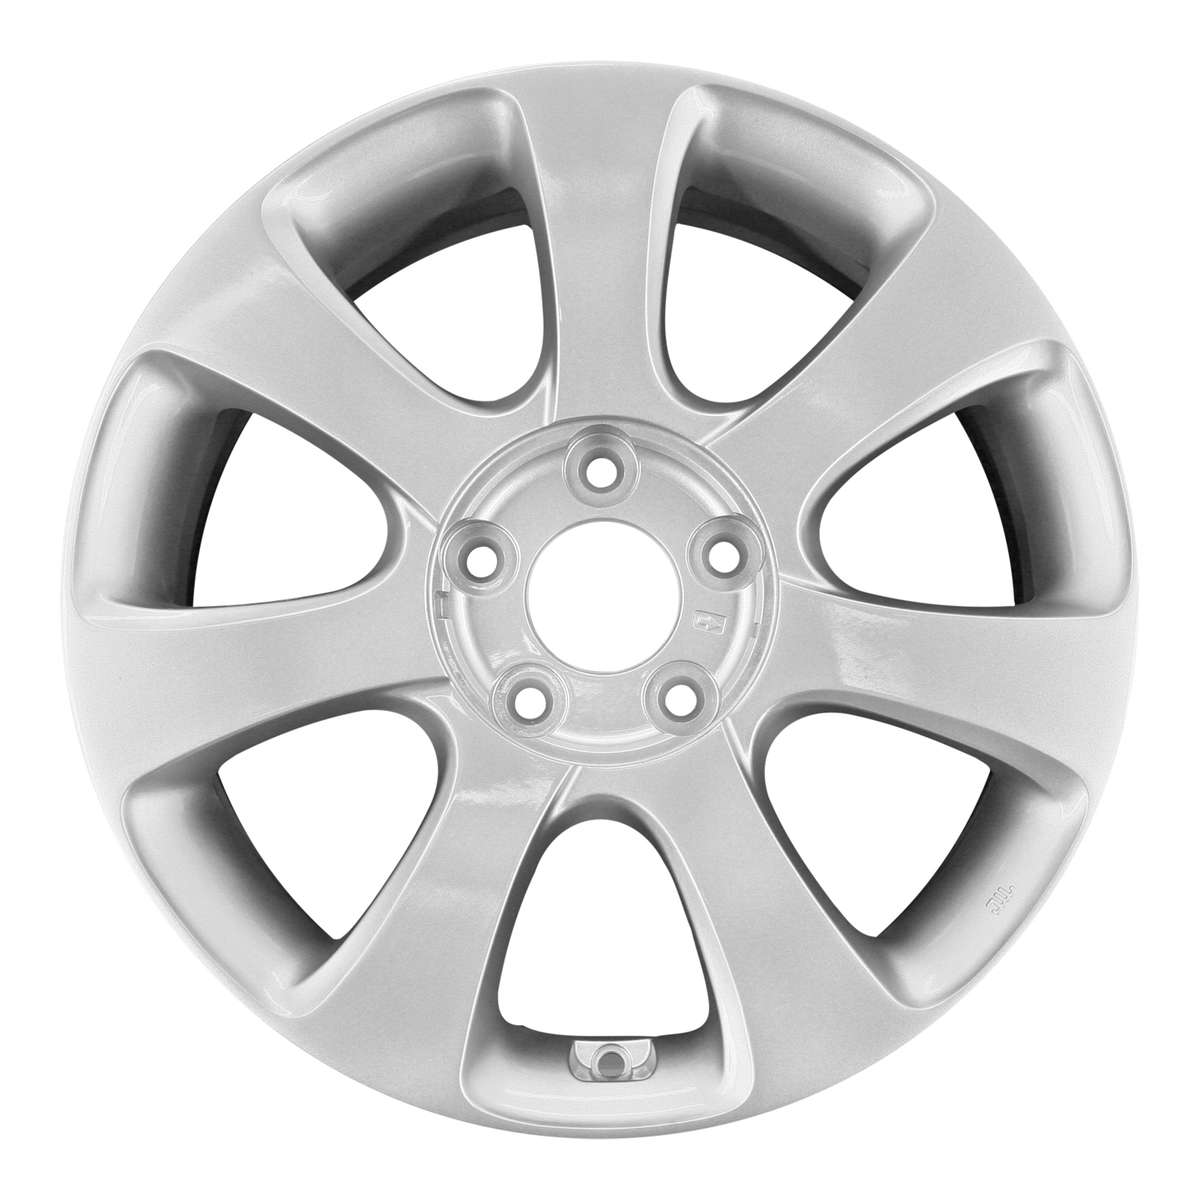 2013 Hyundai Elantra New 17" Replacement Wheel Rim RW70807S